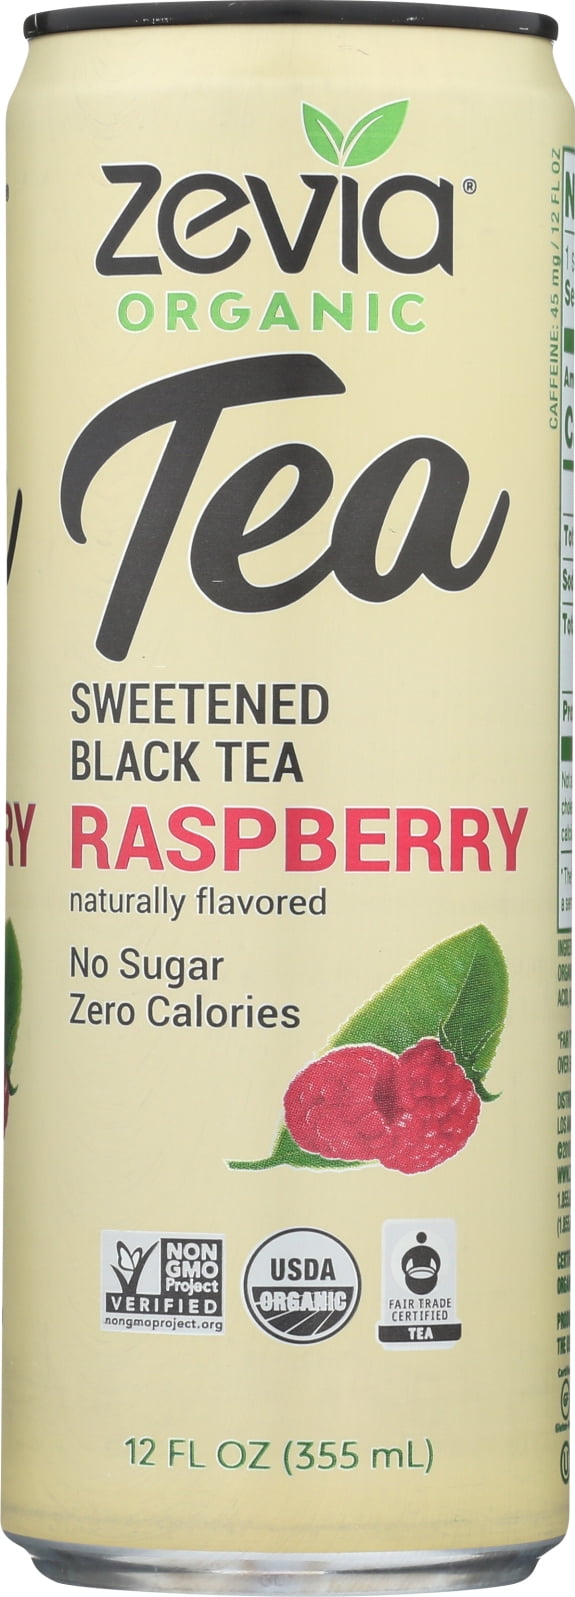 Zevia Tea Sweetened Black Tea Raspberry 12 Fl Oz Can